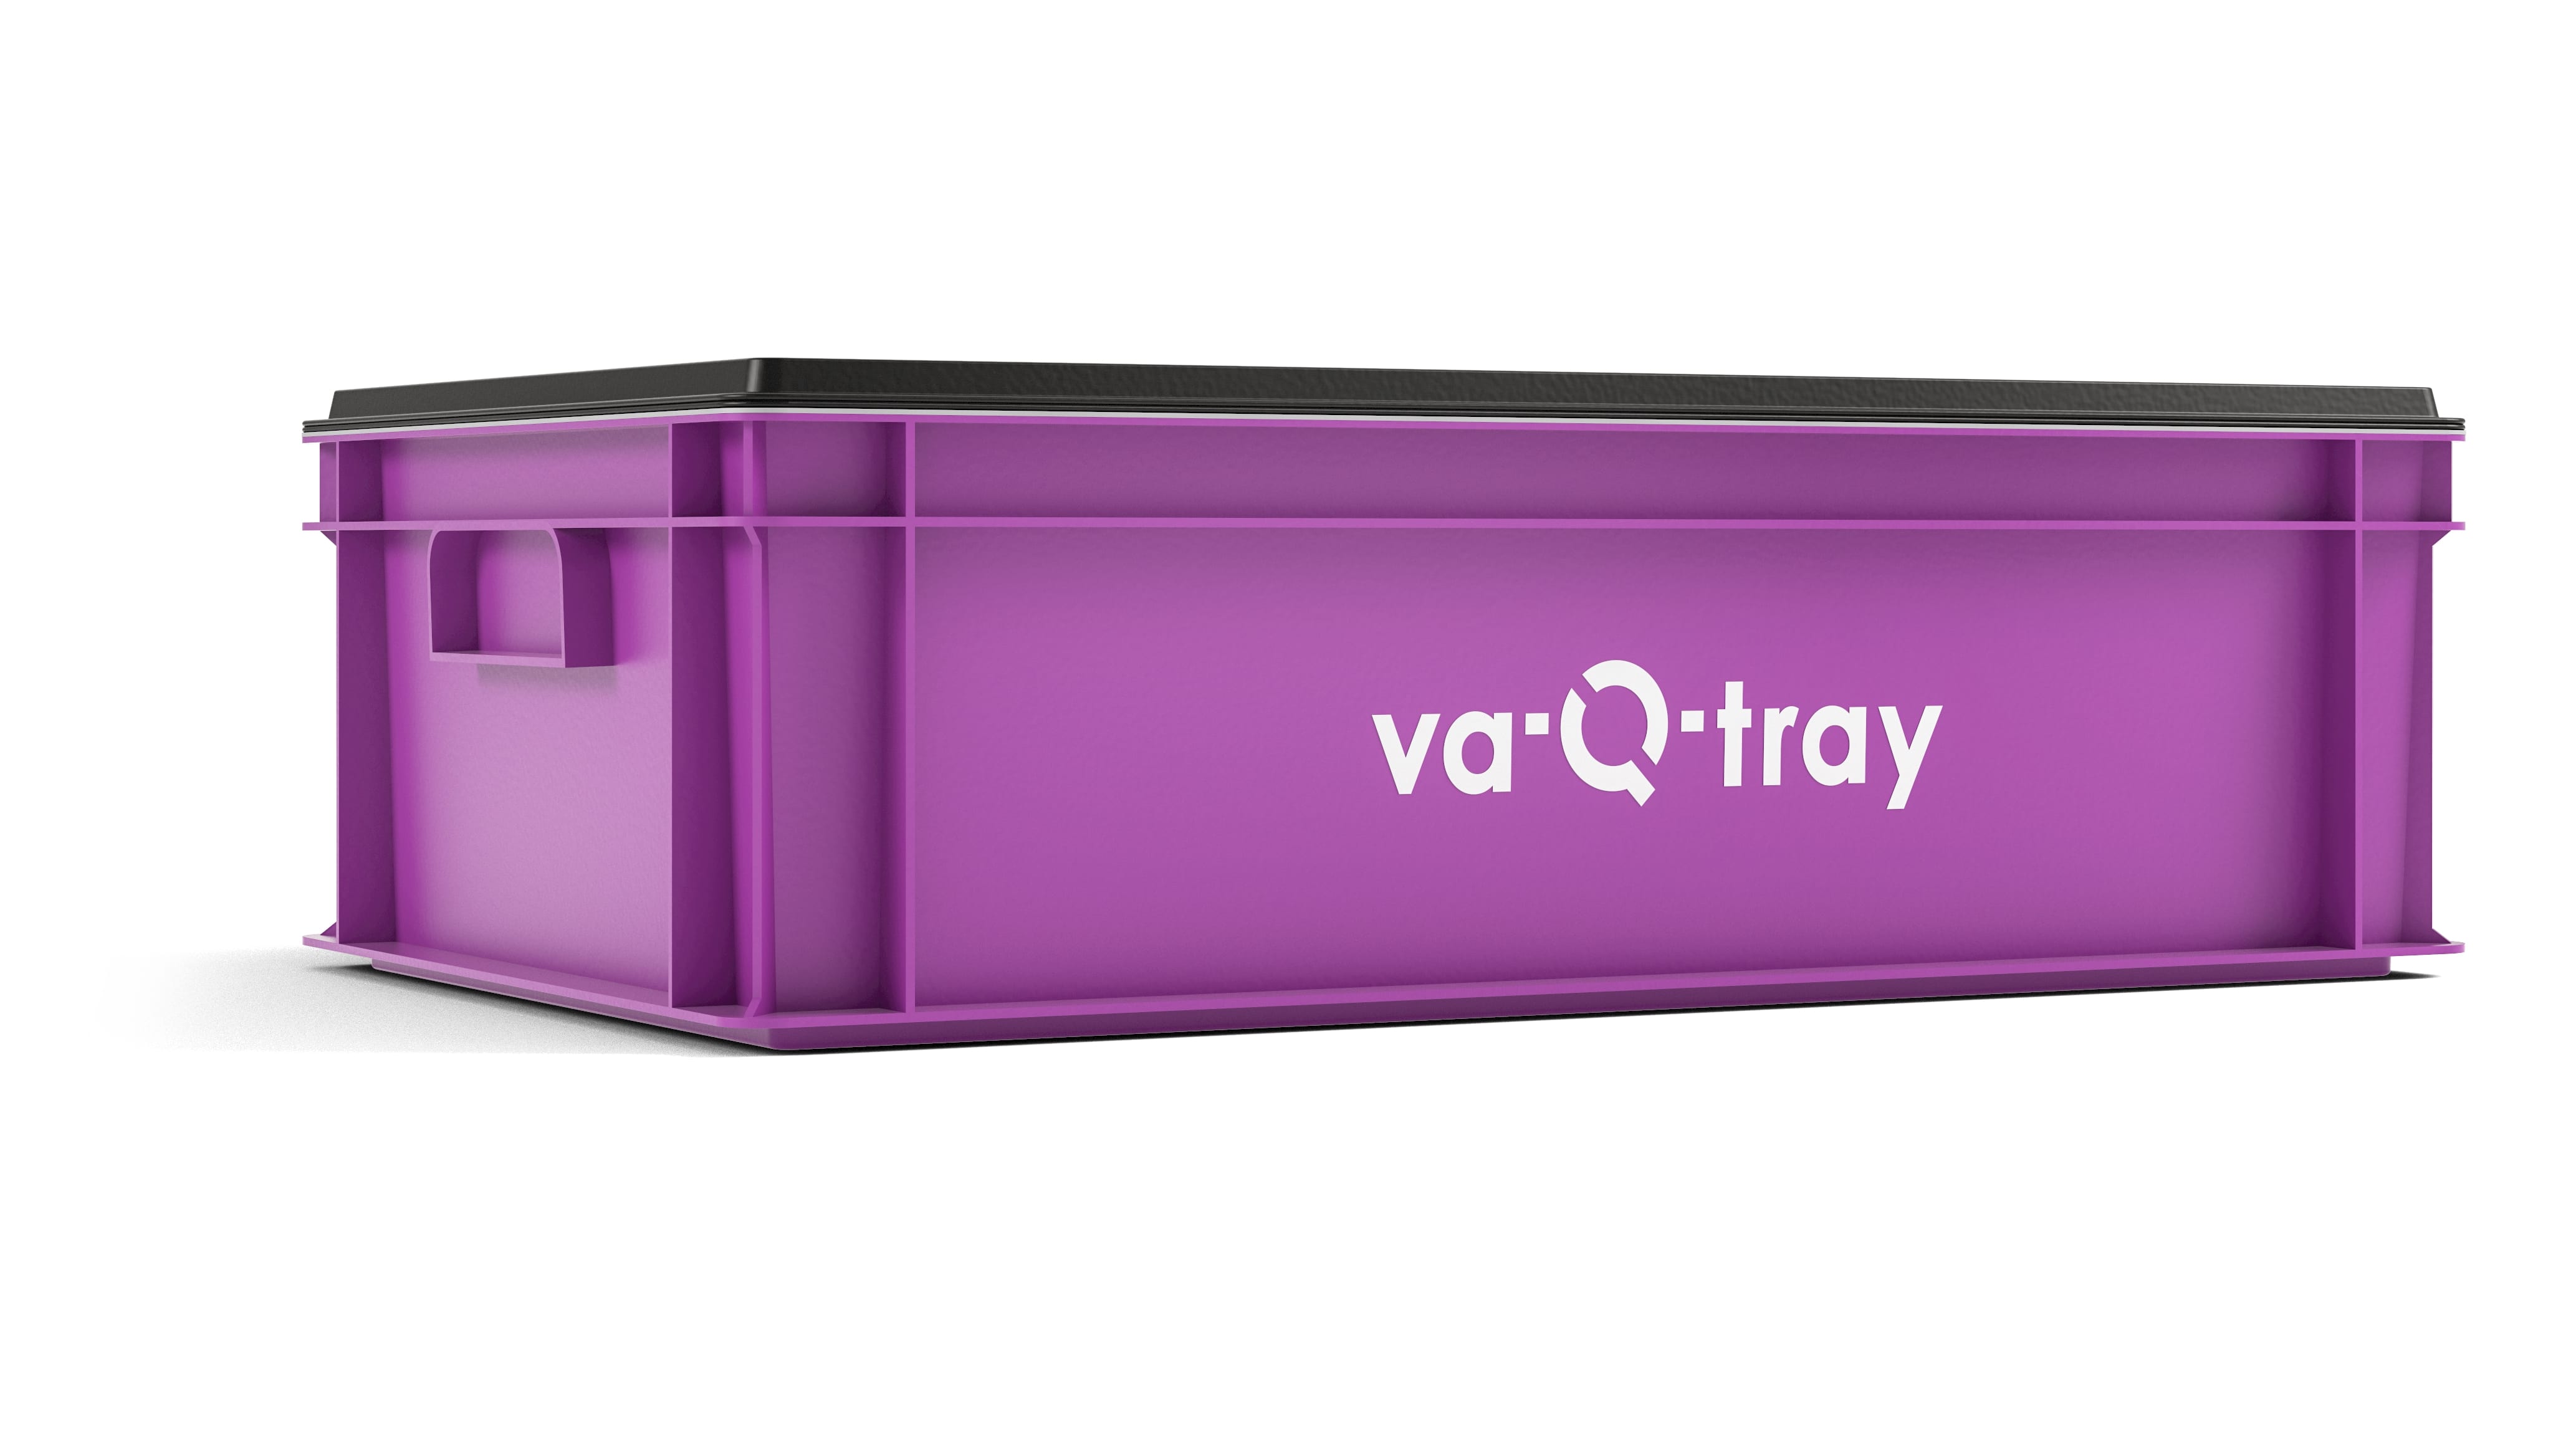 va-Q-tray, BC000686